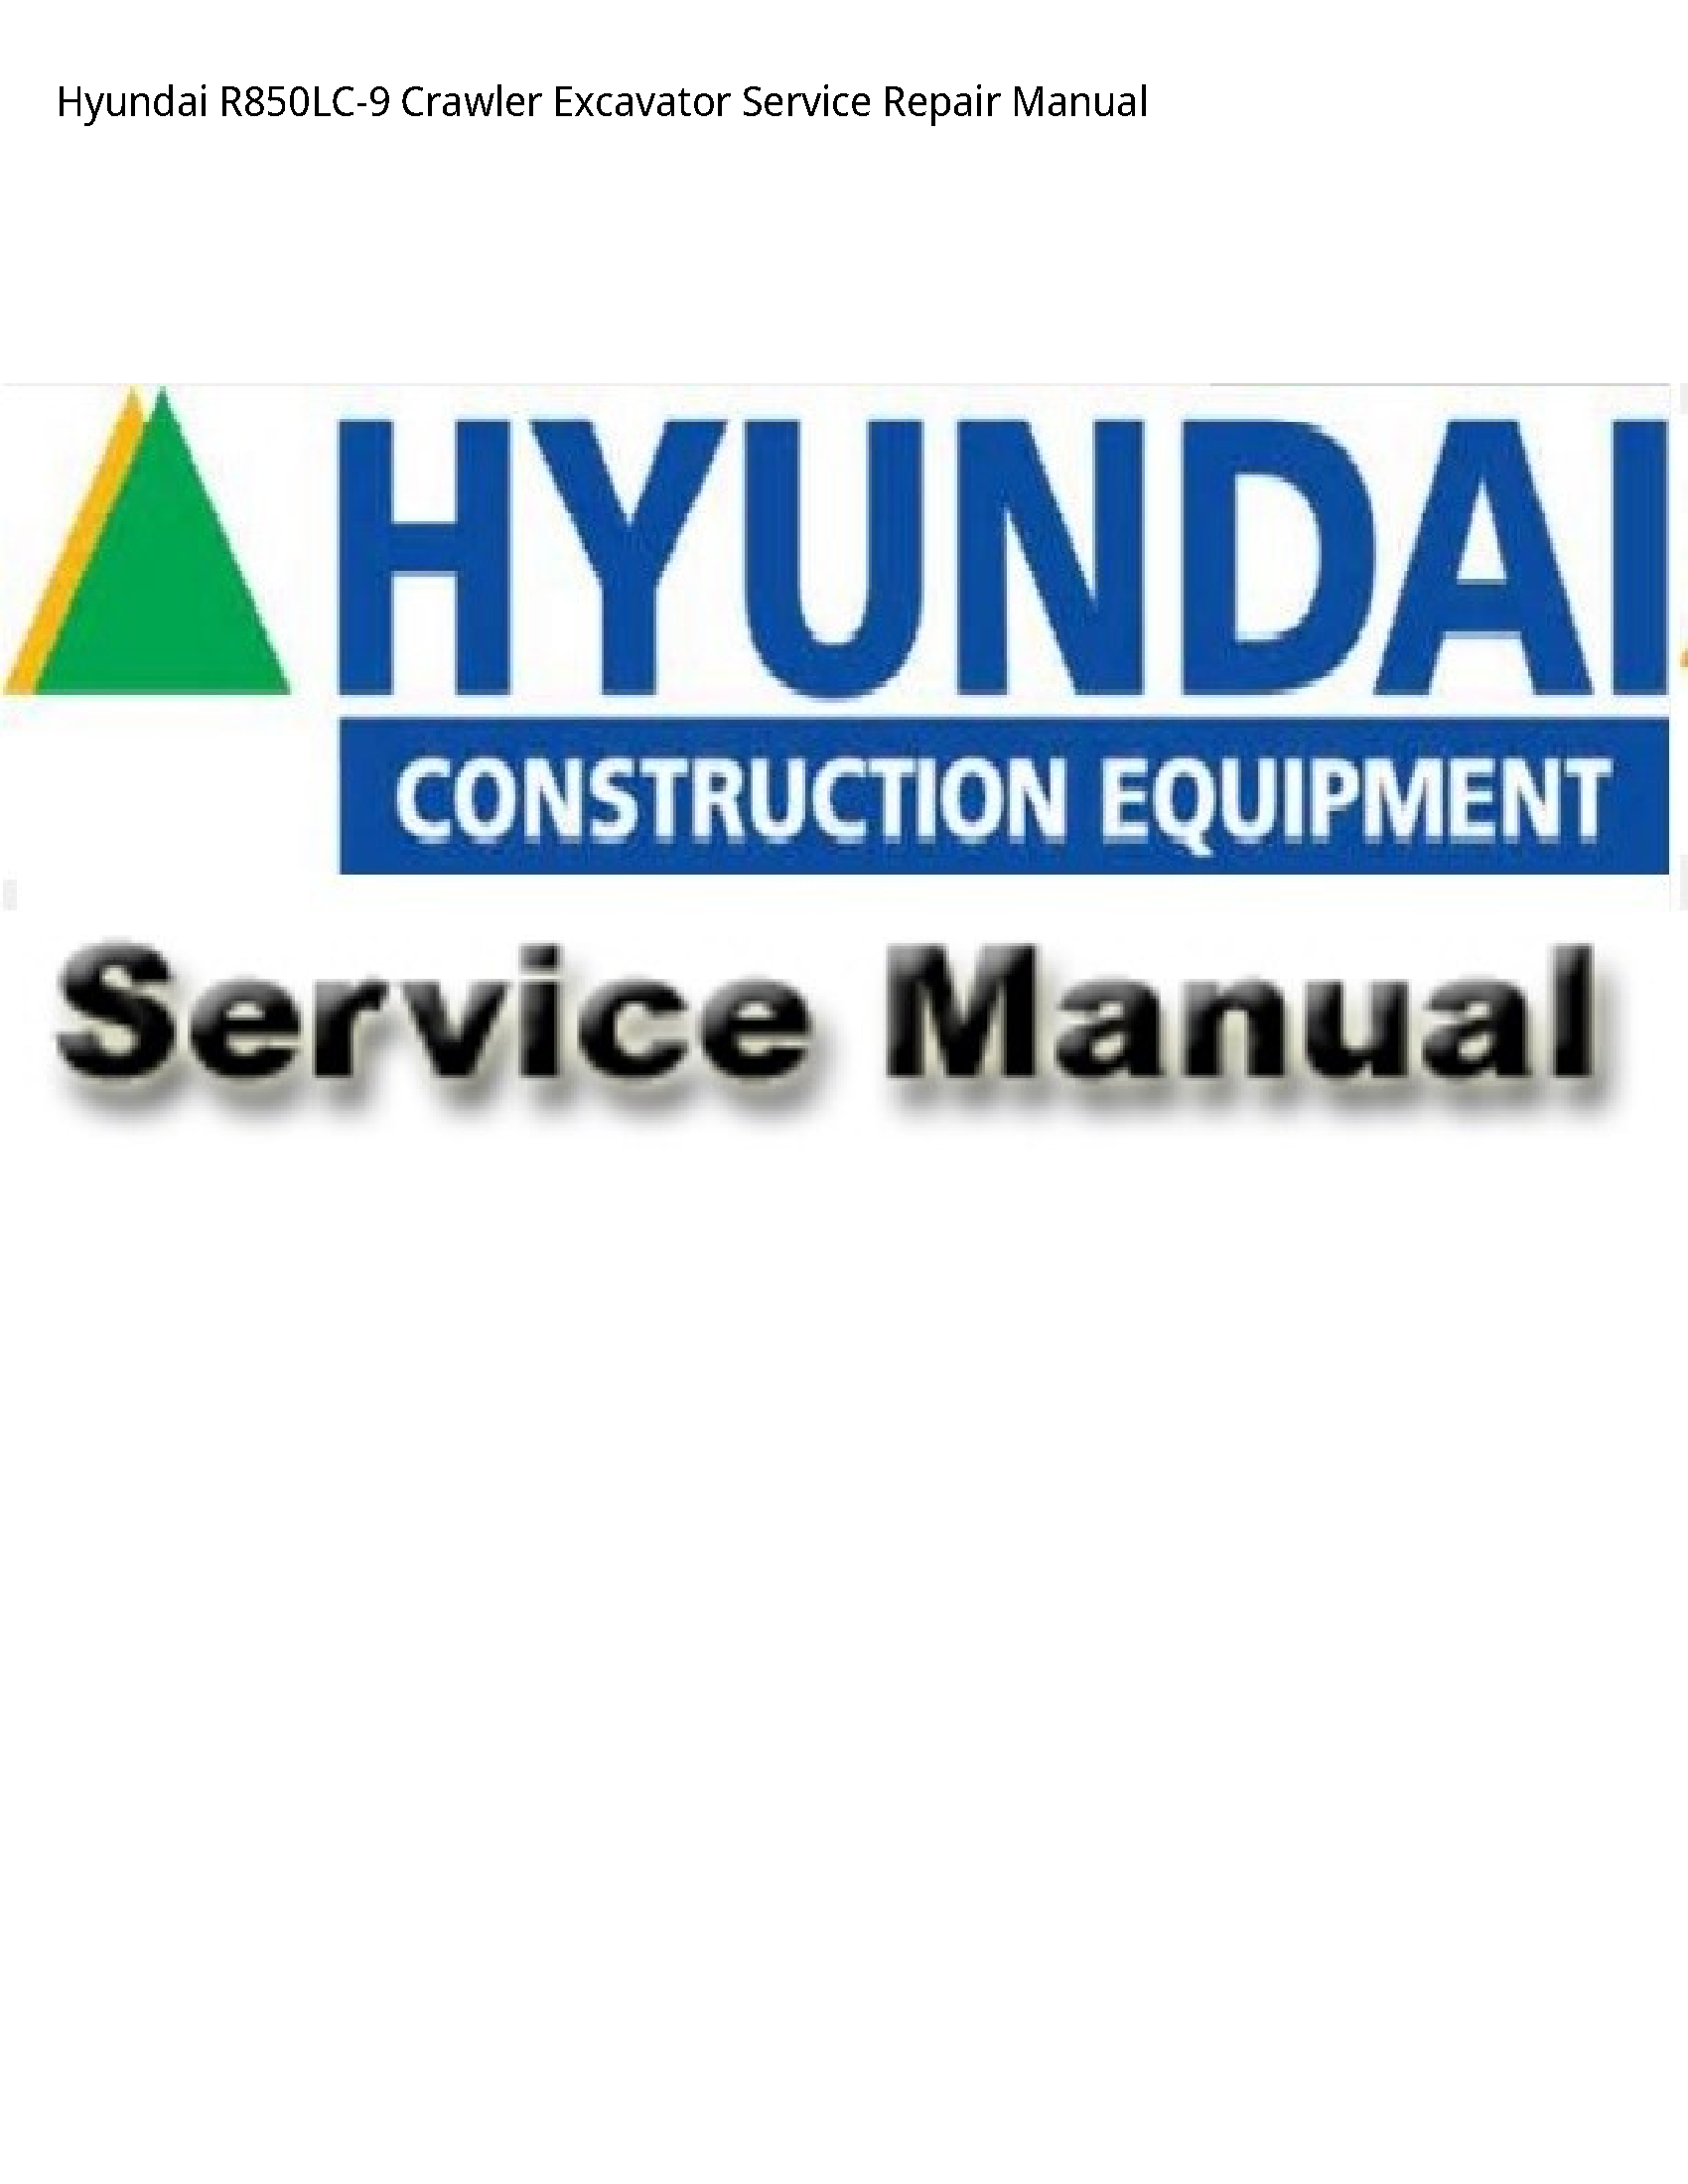 Hyundai R850LC-9 Crawler Excavator manual